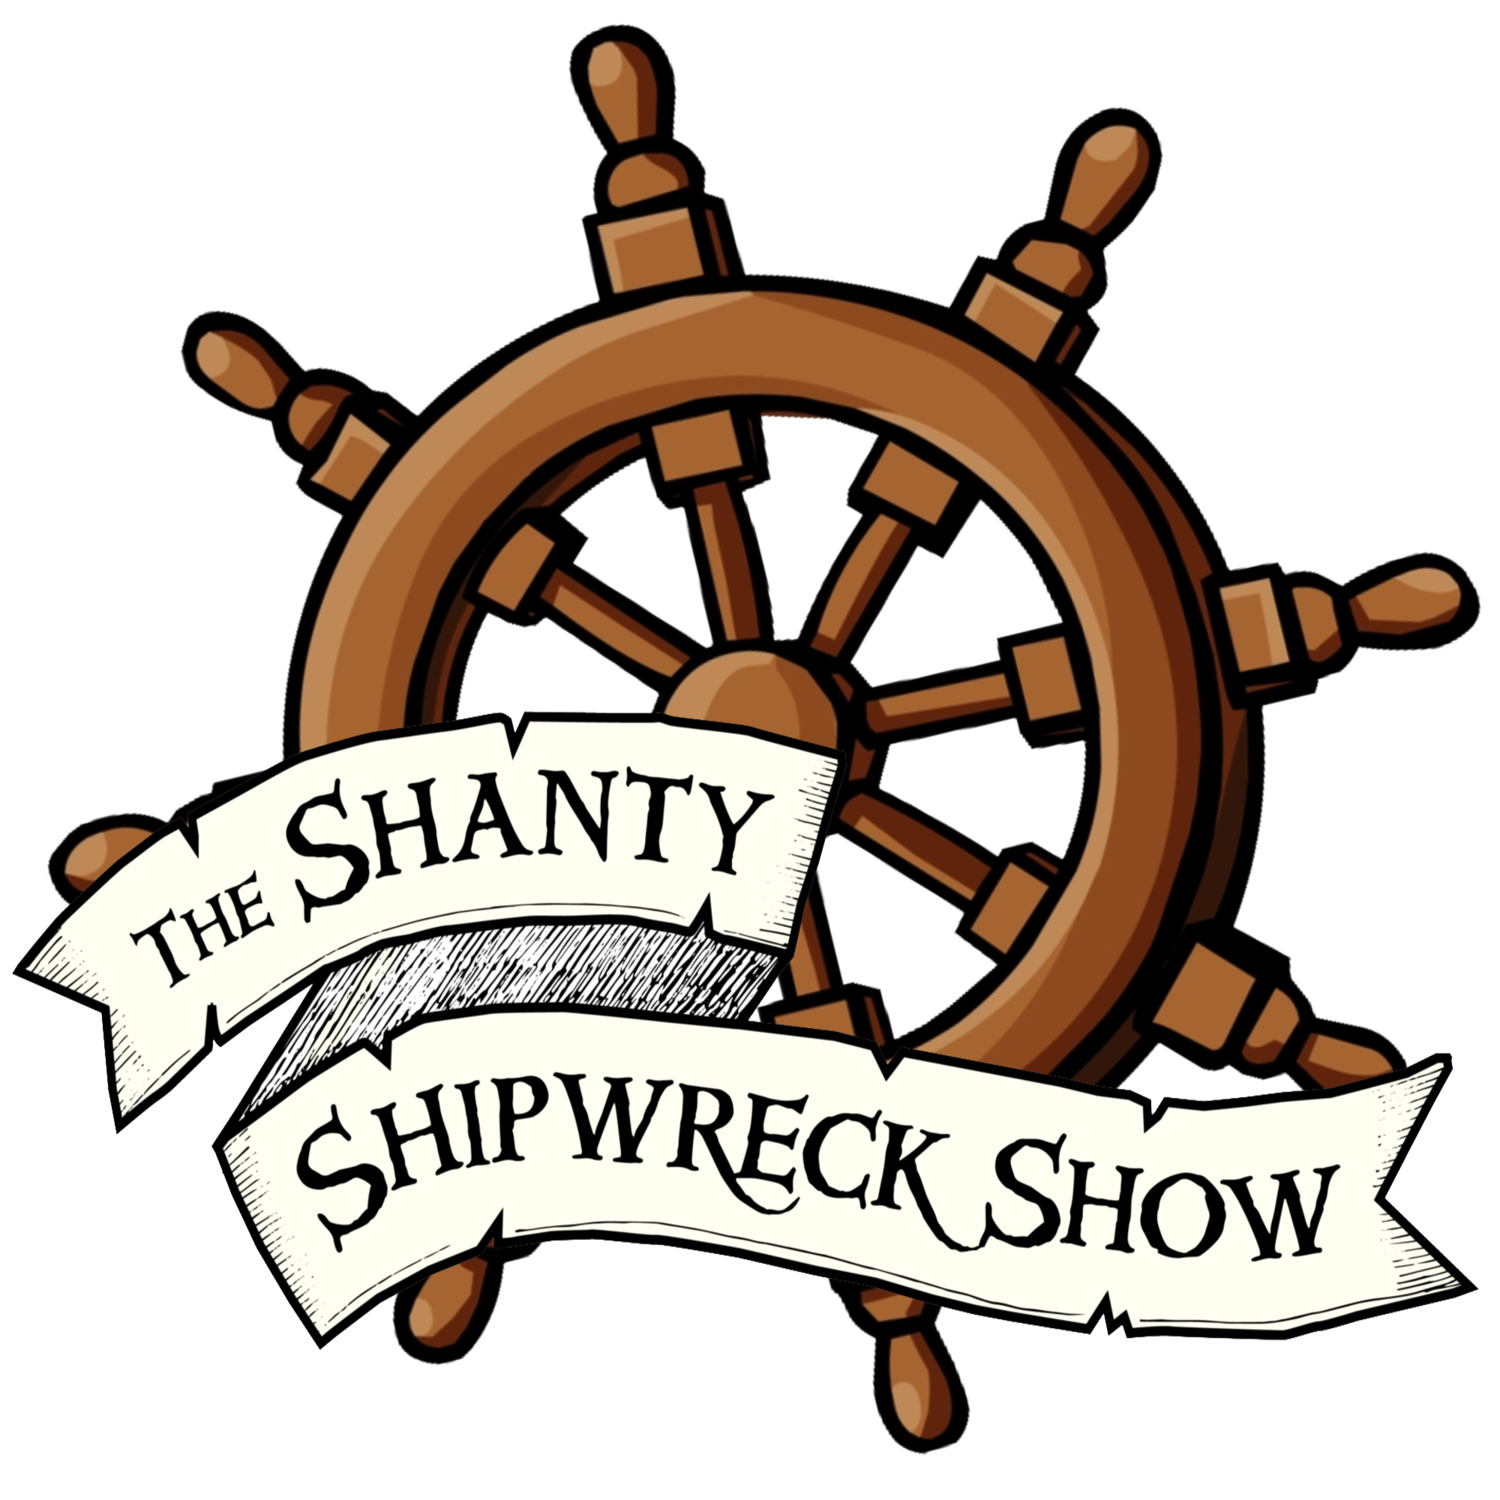 The Shanty Shipwreck Show